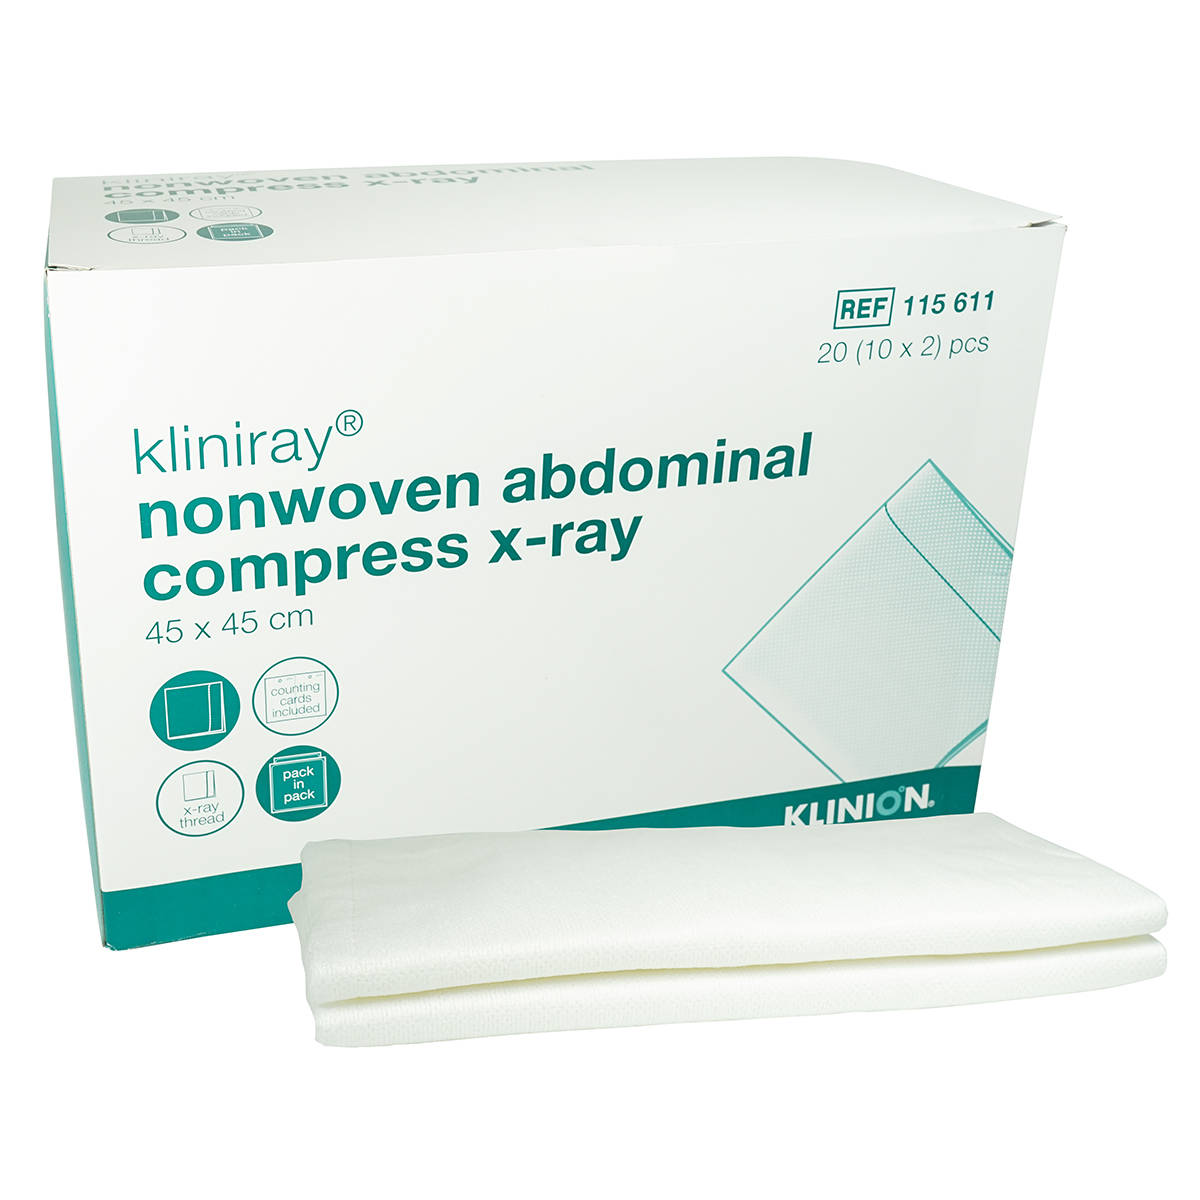 Non-woven abdominal compress with x-ray detectable thread